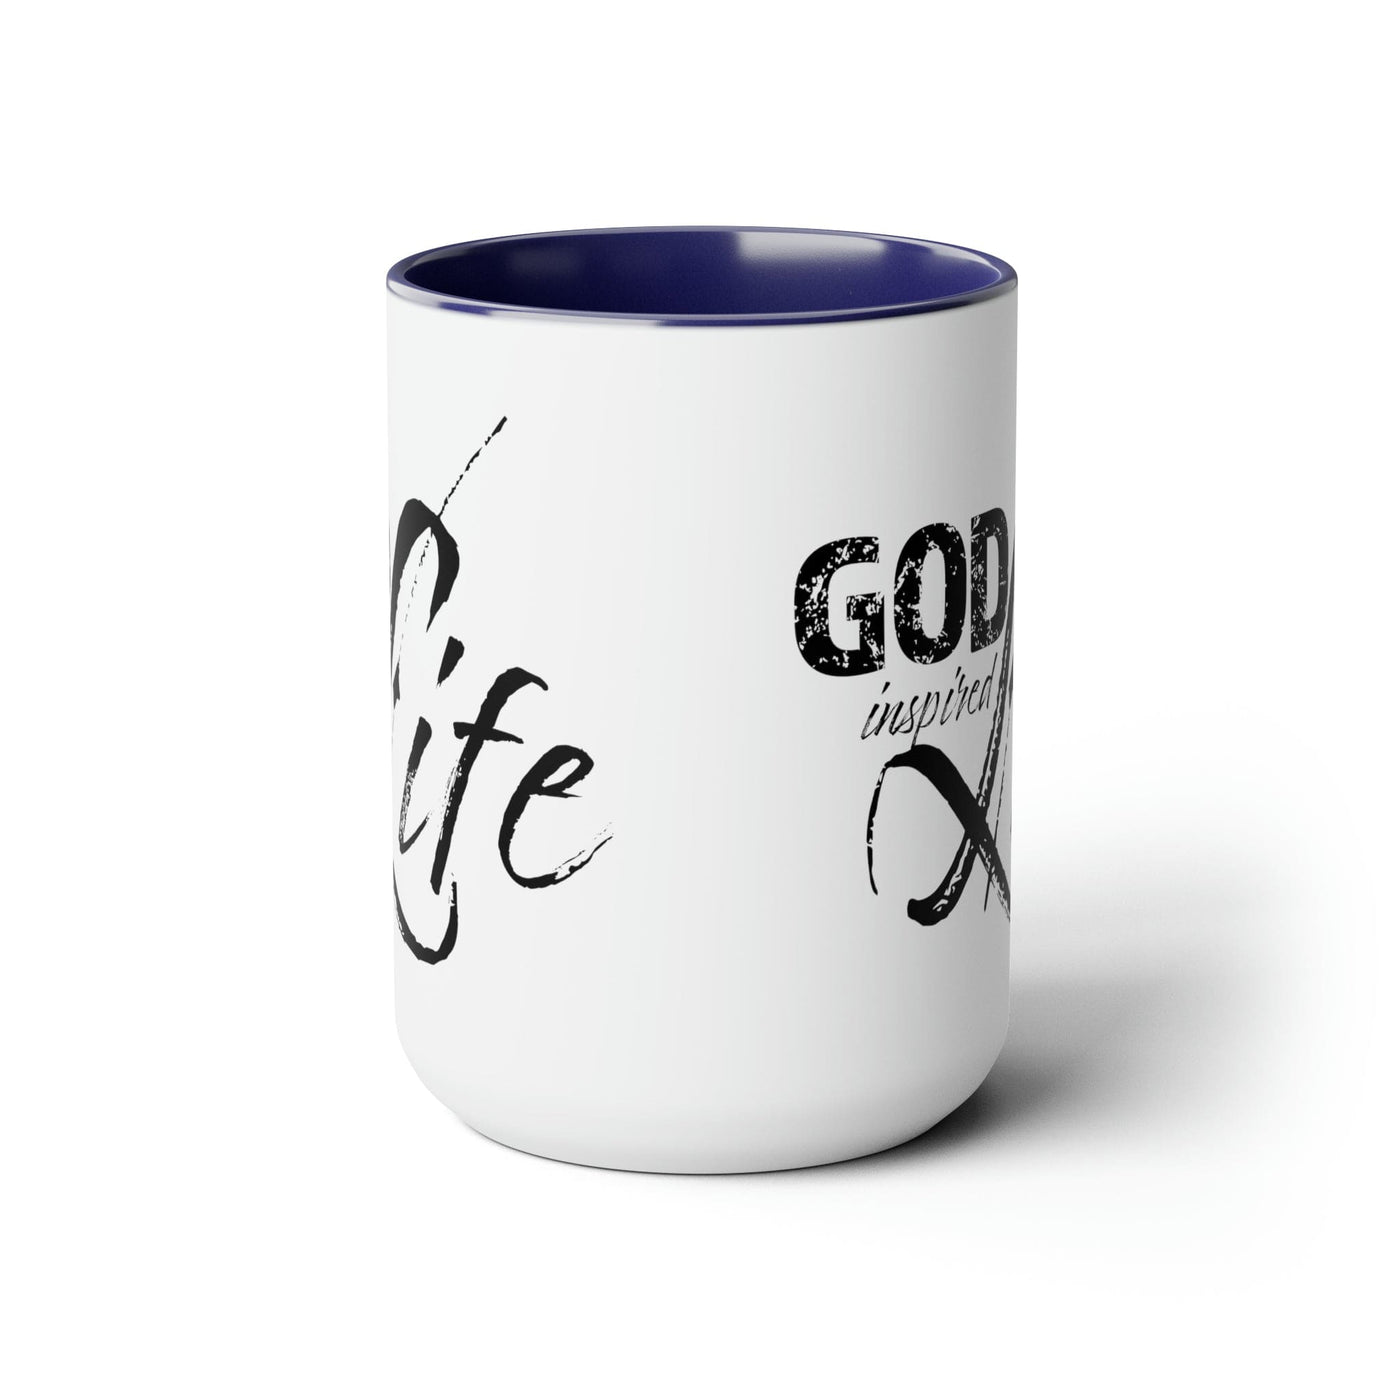 Accent Ceramic Coffee Mug 15oz - God Inspired Life Black Illustration -